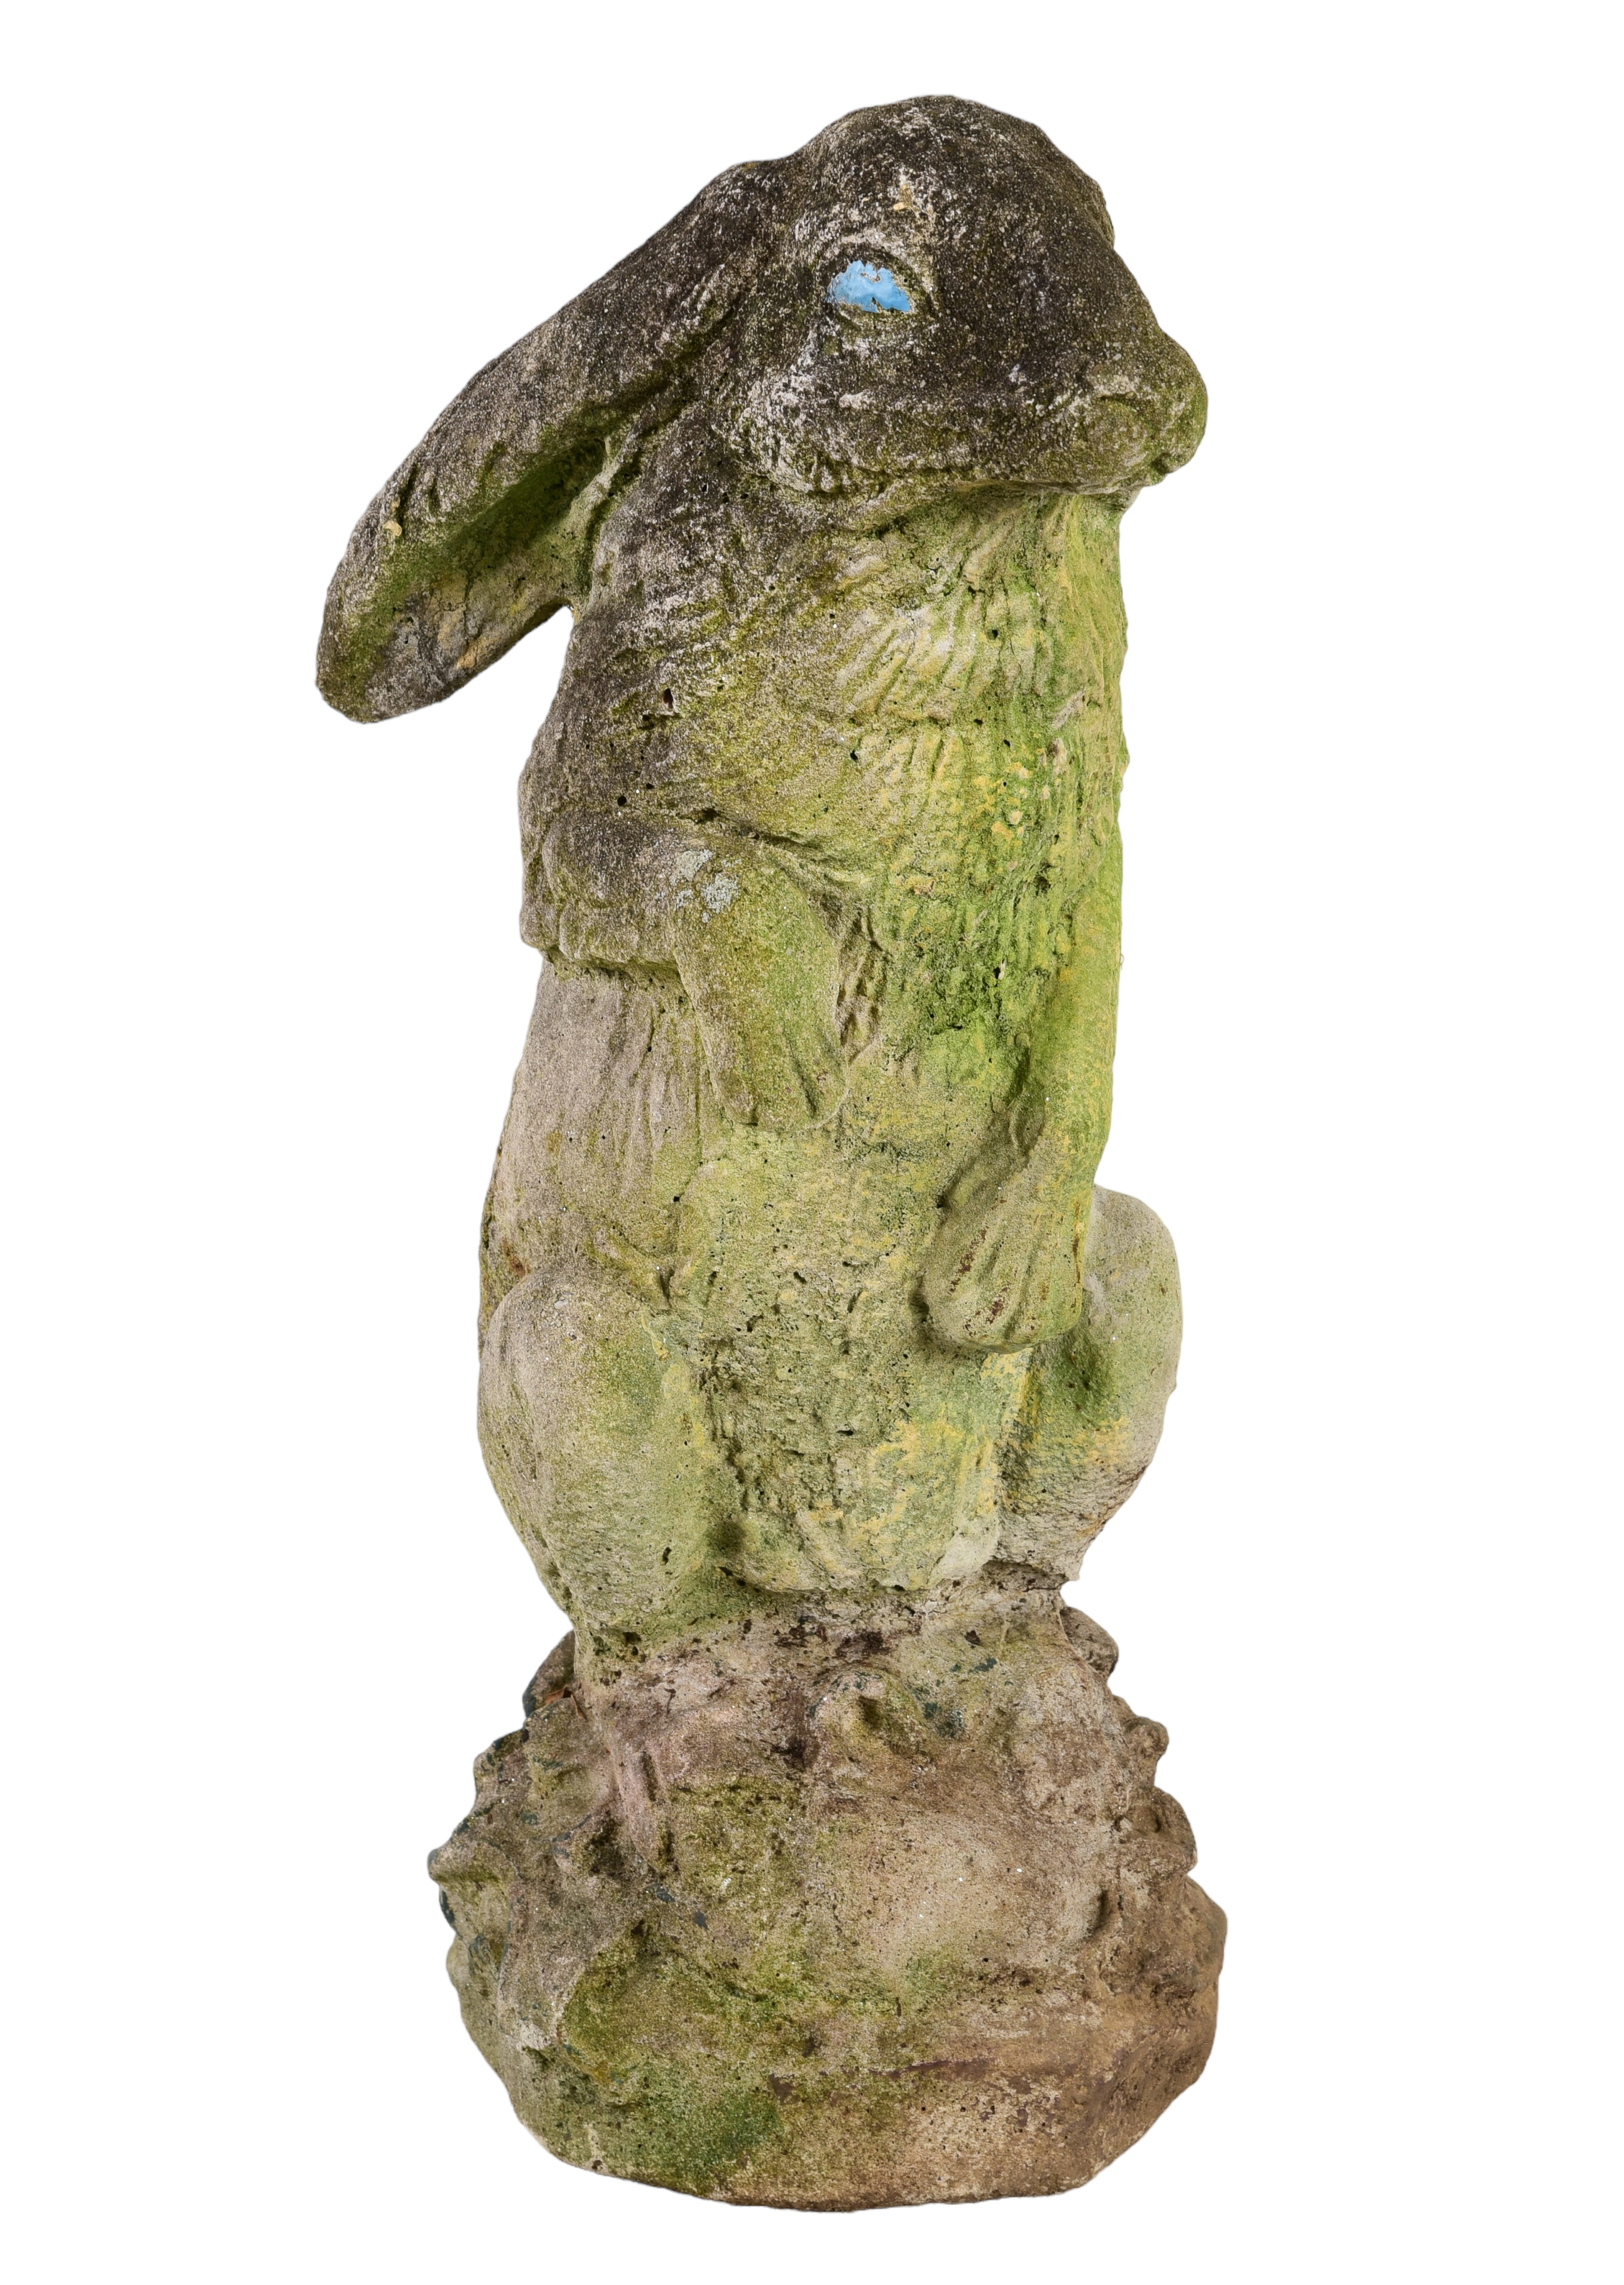 Cement garden statue of rabbit 3c66b0